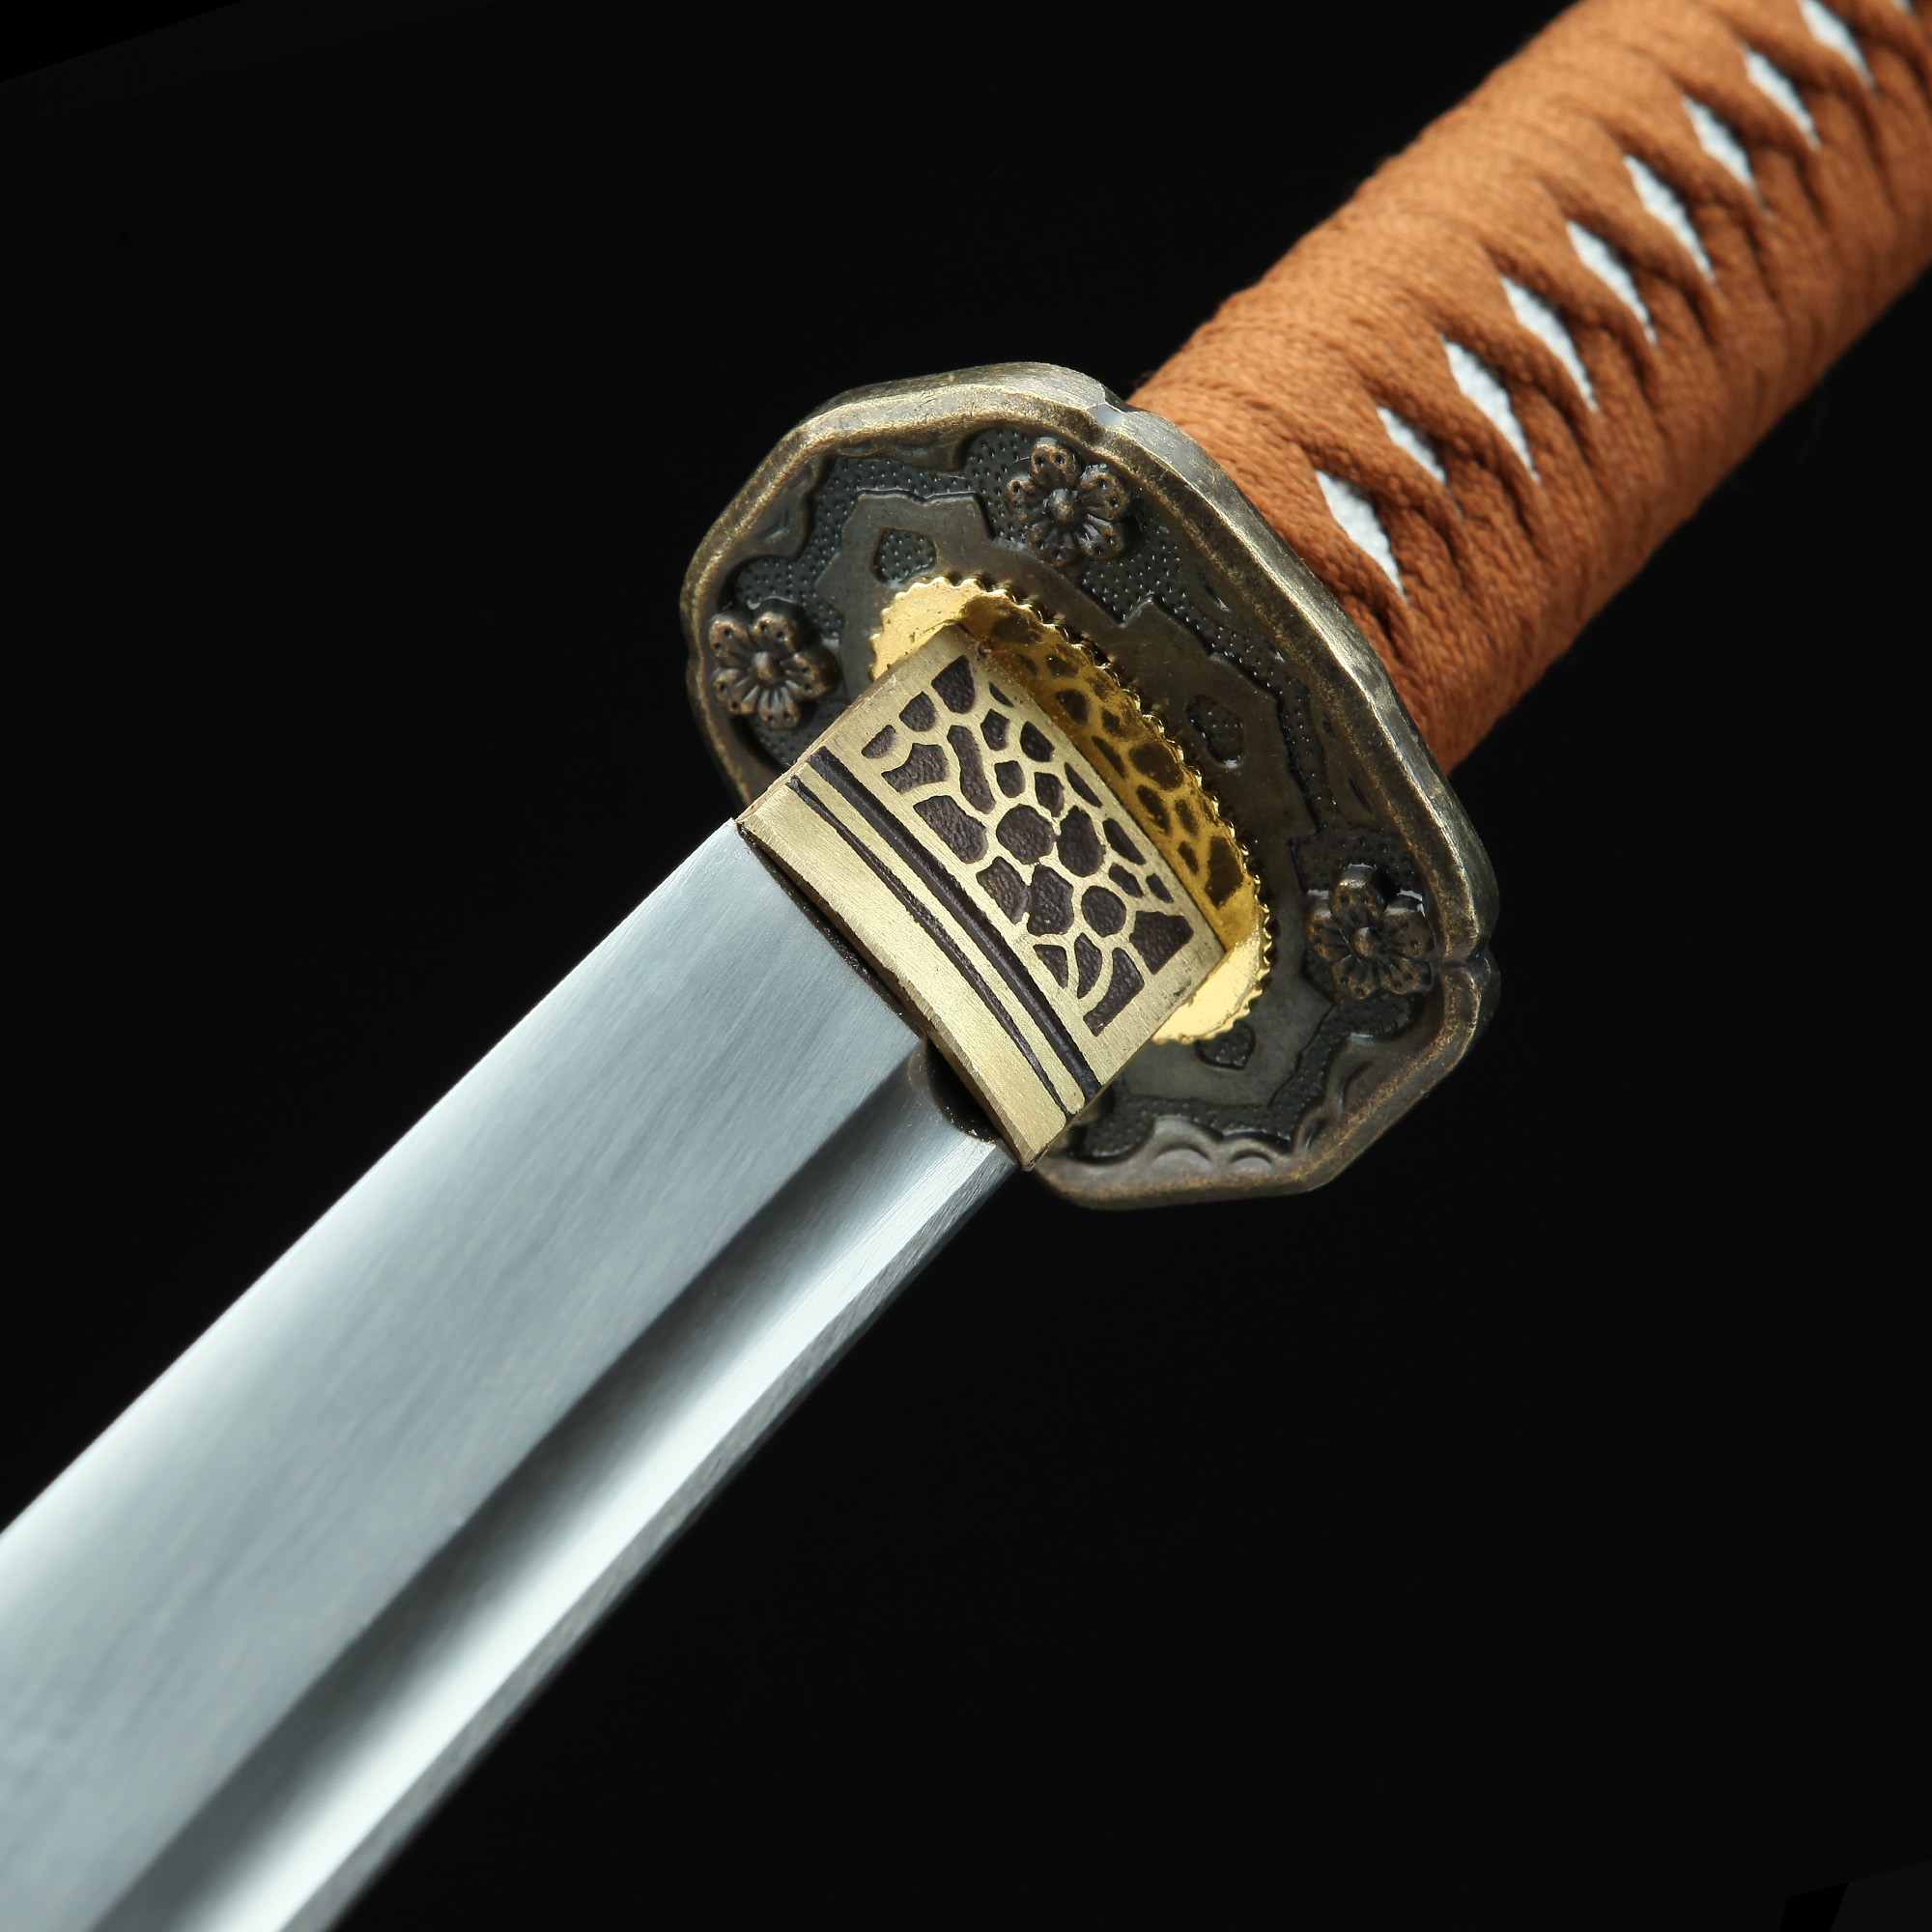 authentic katana blade made of